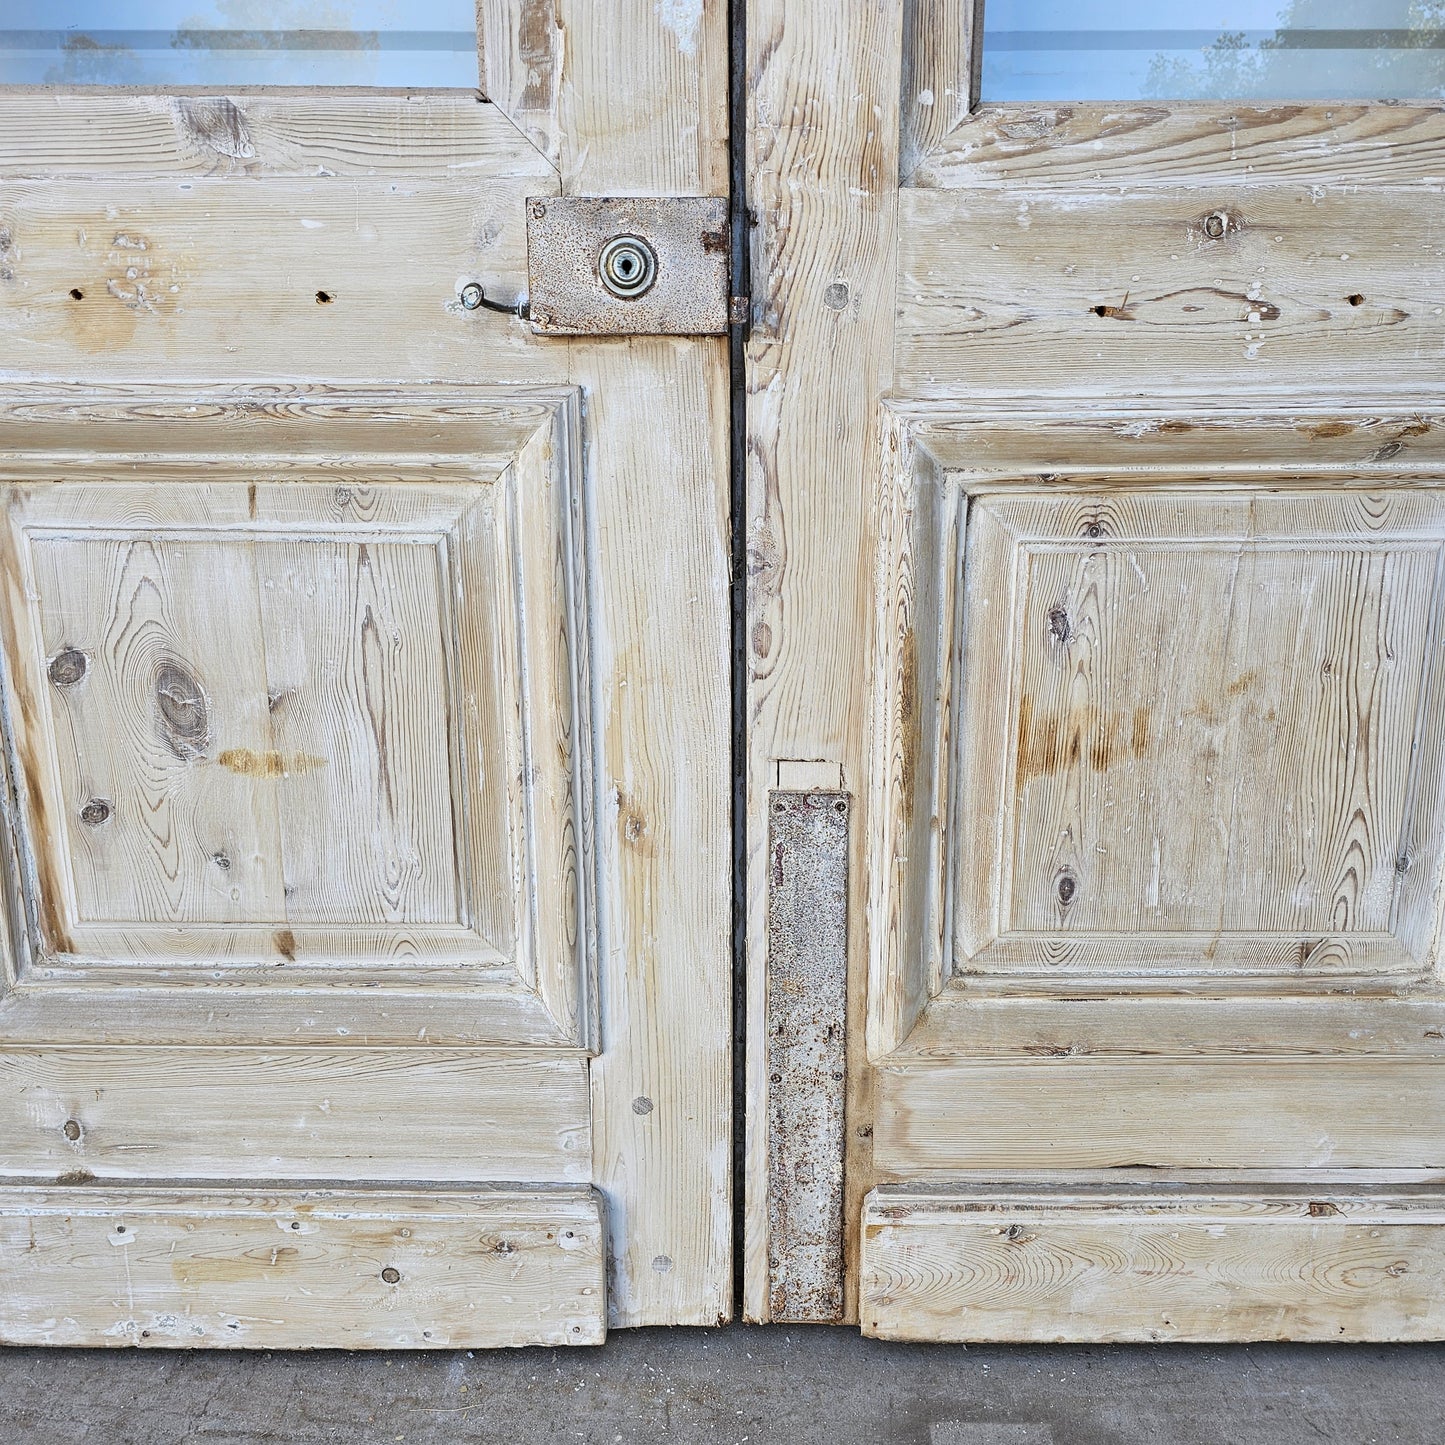 Pair of Carved Wood Doors w/2 Glass Lites